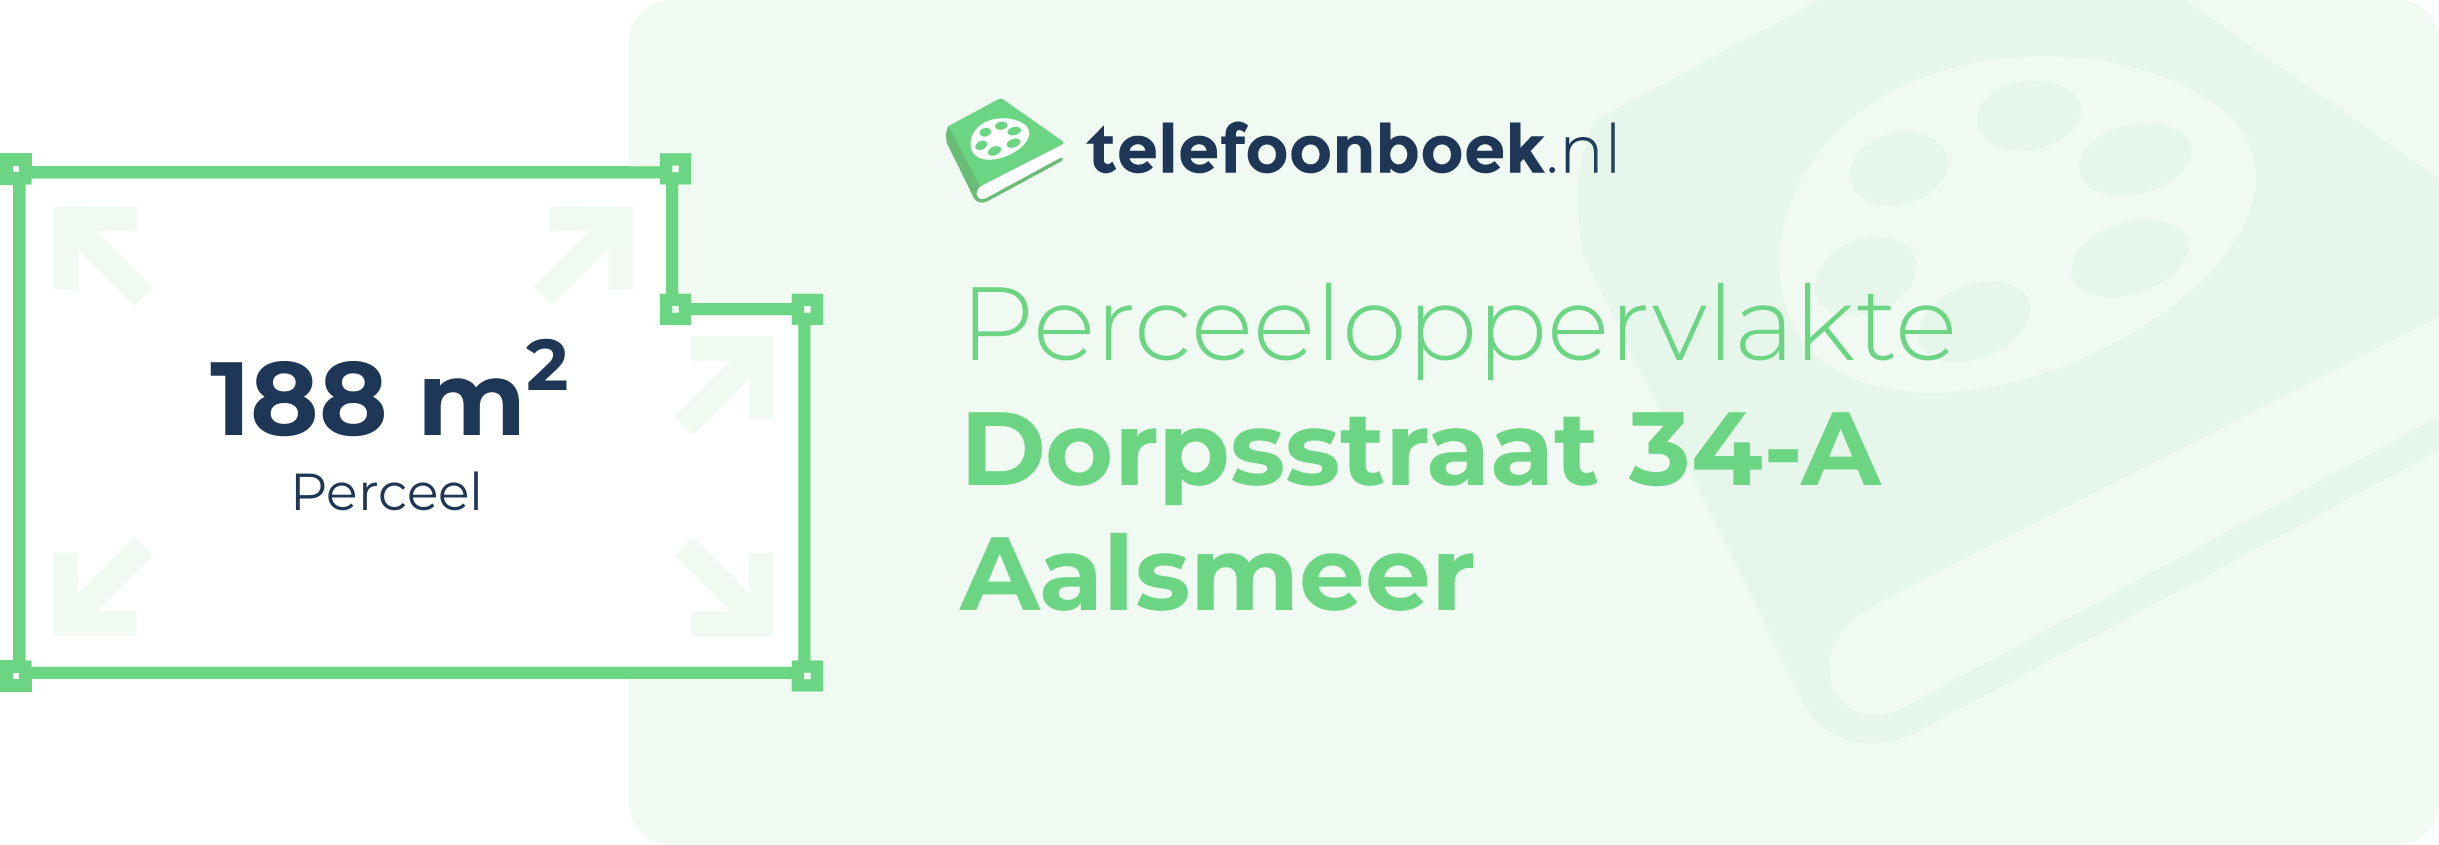 Perceeloppervlakte Dorpsstraat 34-A Aalsmeer